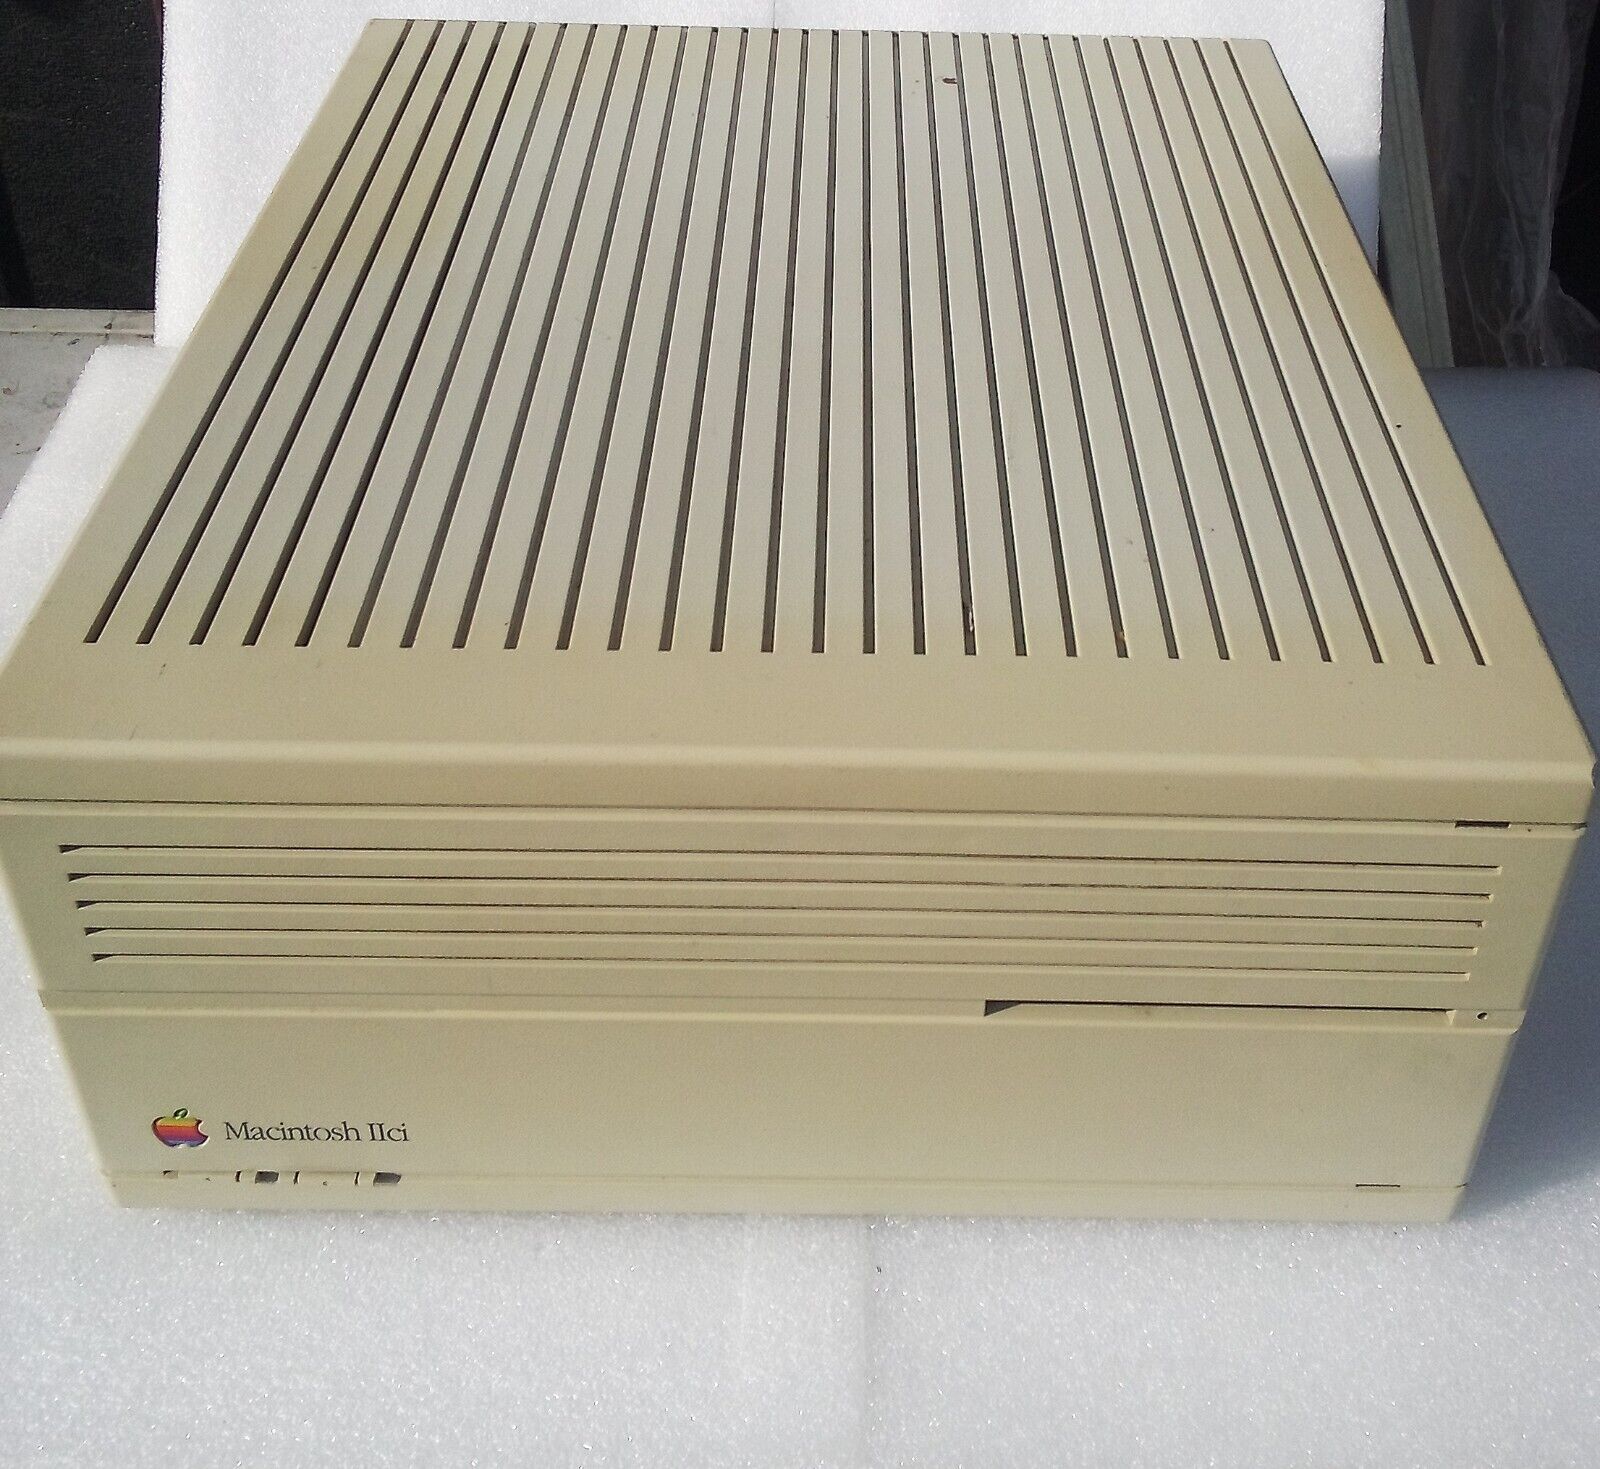 Vintage Apple Macintosh IIci Desktop Computer * UNTESTED * Clean Exterior